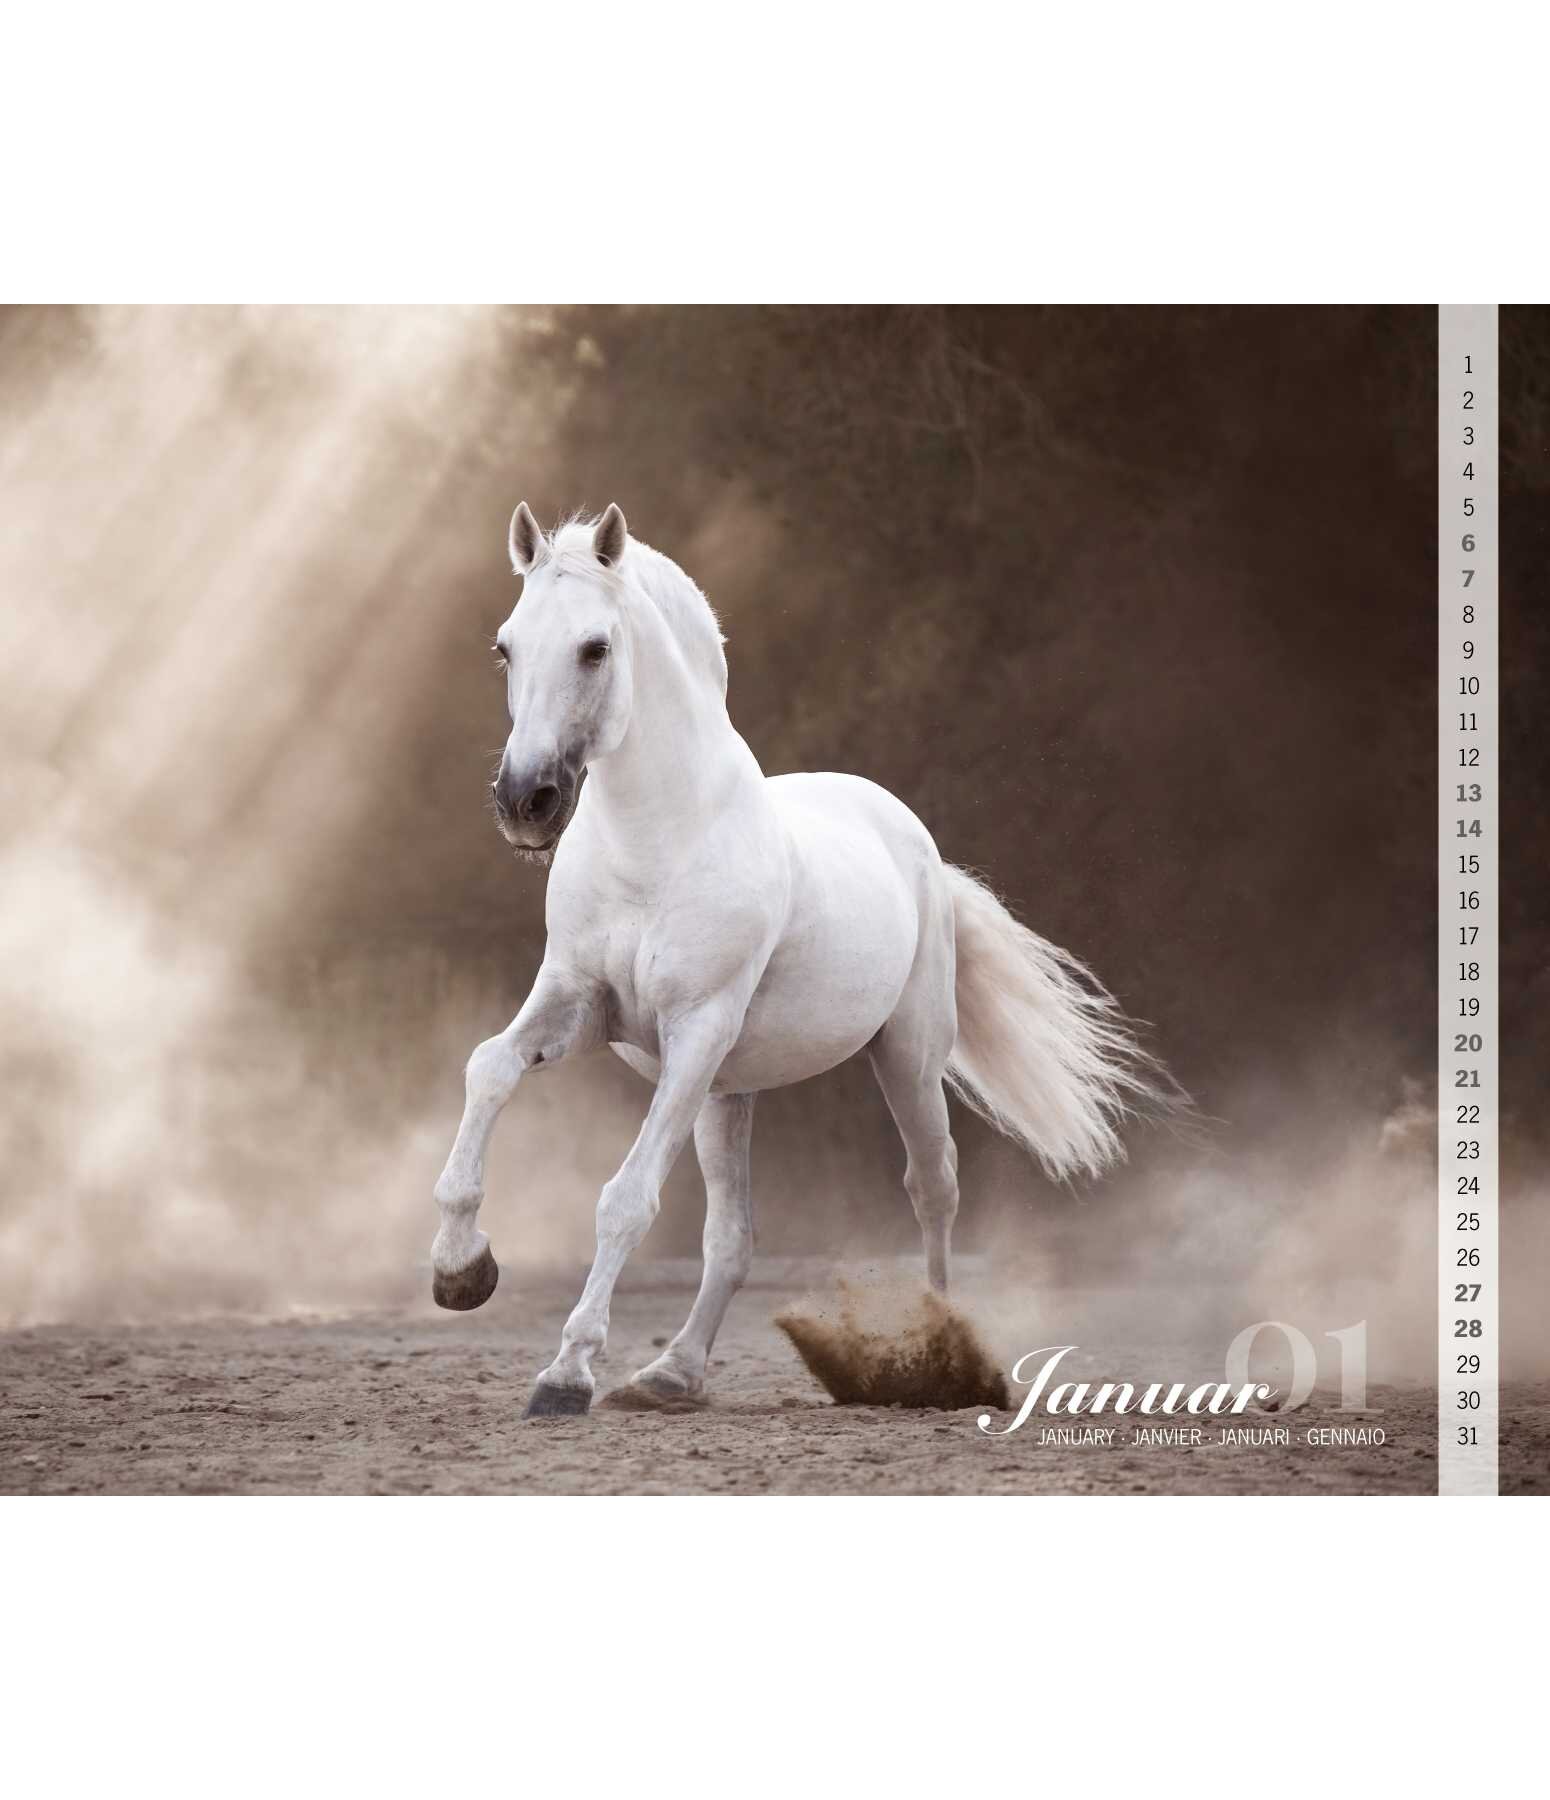 Baroque Calendar 2023 - Gifts - Kramer Equestrian